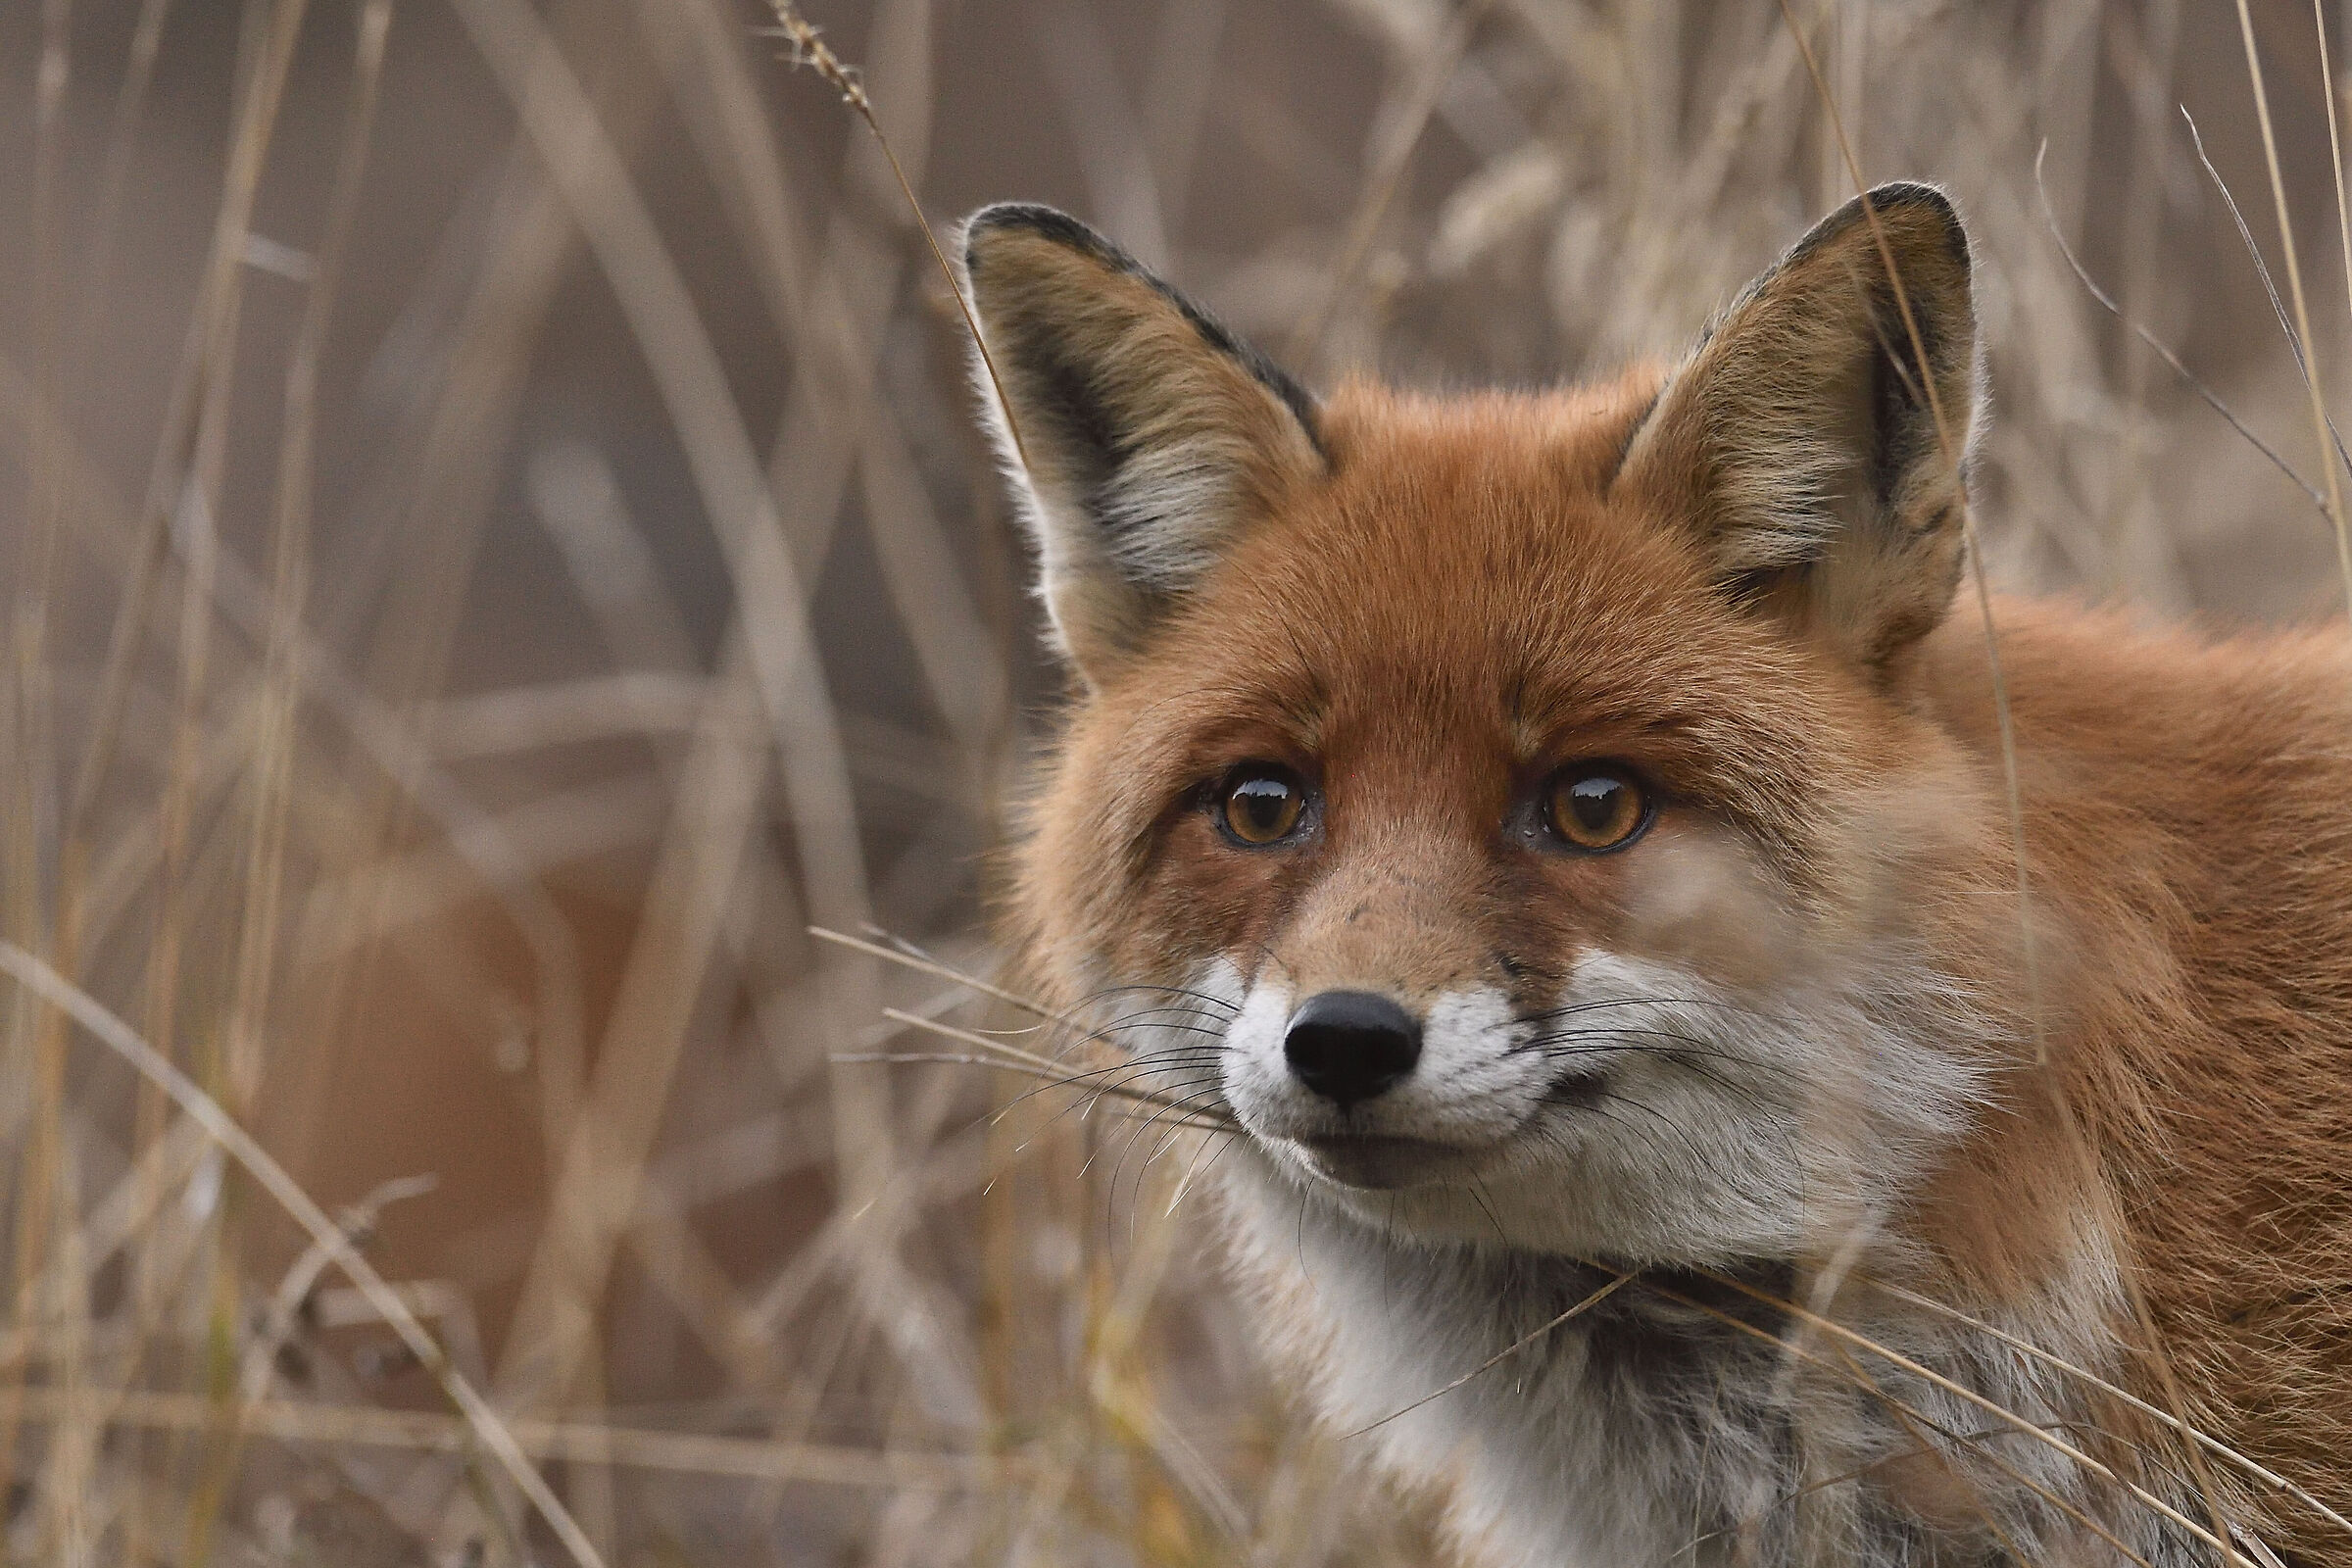 The fox's gaze...